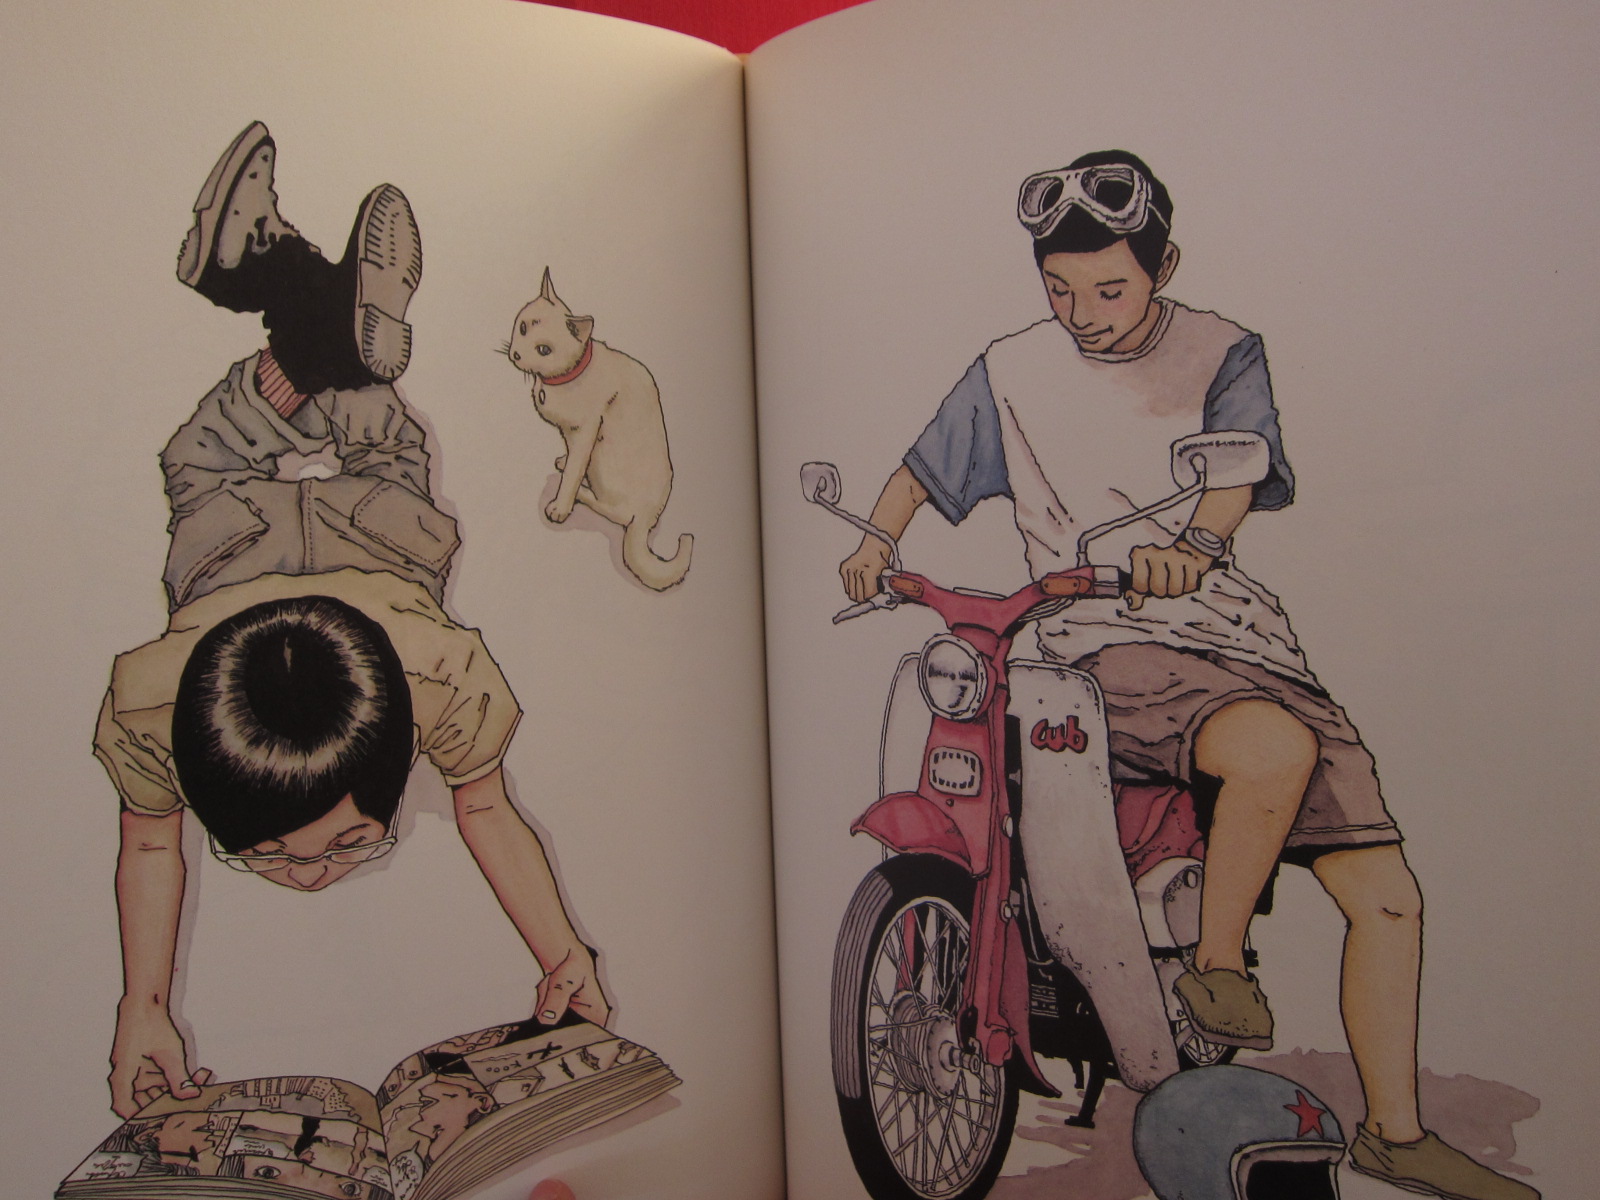 Taiyo Matsumoto "101" illustration art book - Anime Art ...